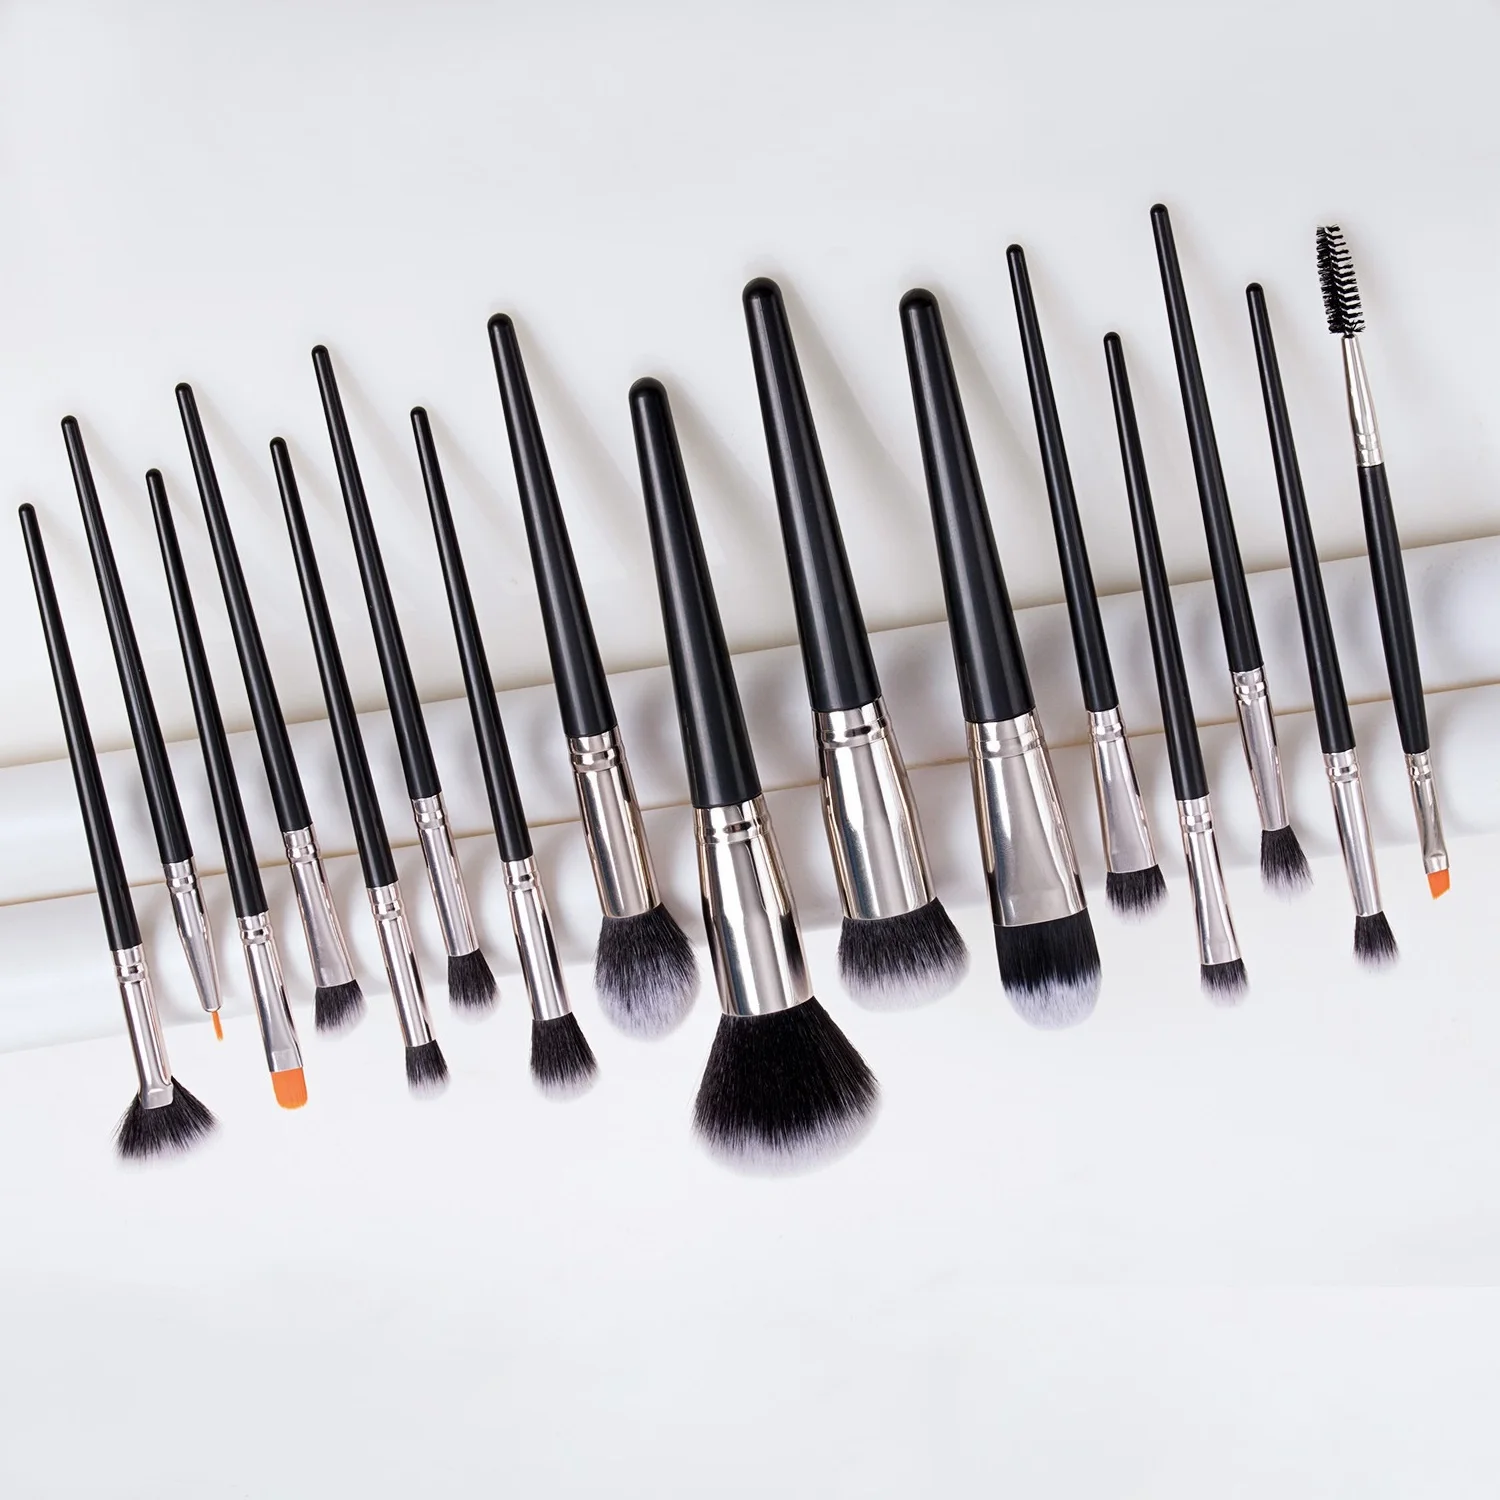 

16pcs Soft Fluffy Maquiagem Makeup Brushes cosmetiquera Powder Eyeshadow Foundation Blush Blending Brush Beauty Make Up Tool B38